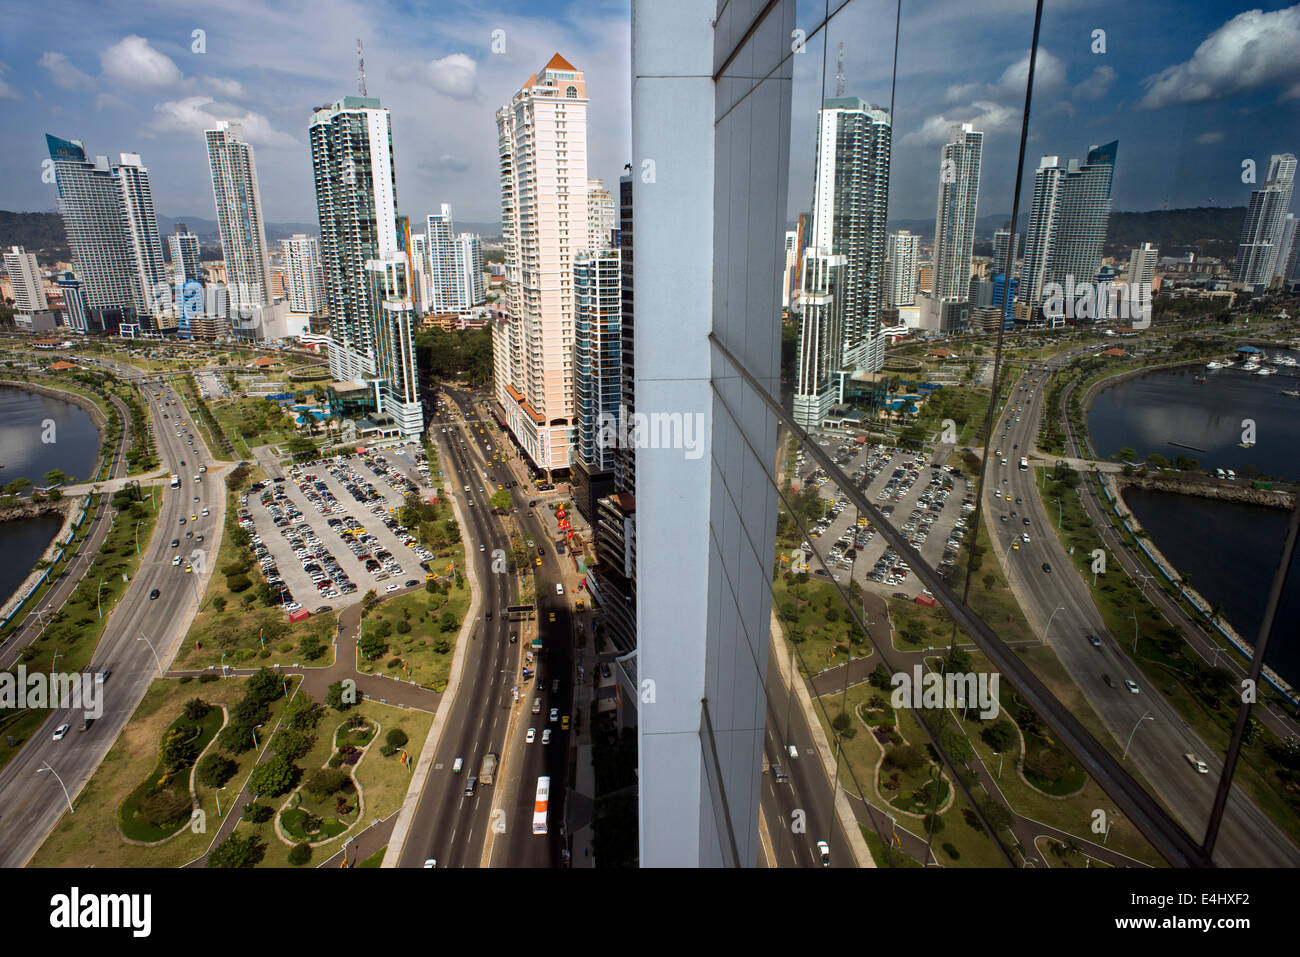 Skyline, Panama City, Panama, Mittelamerika. Cinta Costera Pazifik Küste Beltway Bahia de Panama linear Park Seawall s Stockfoto